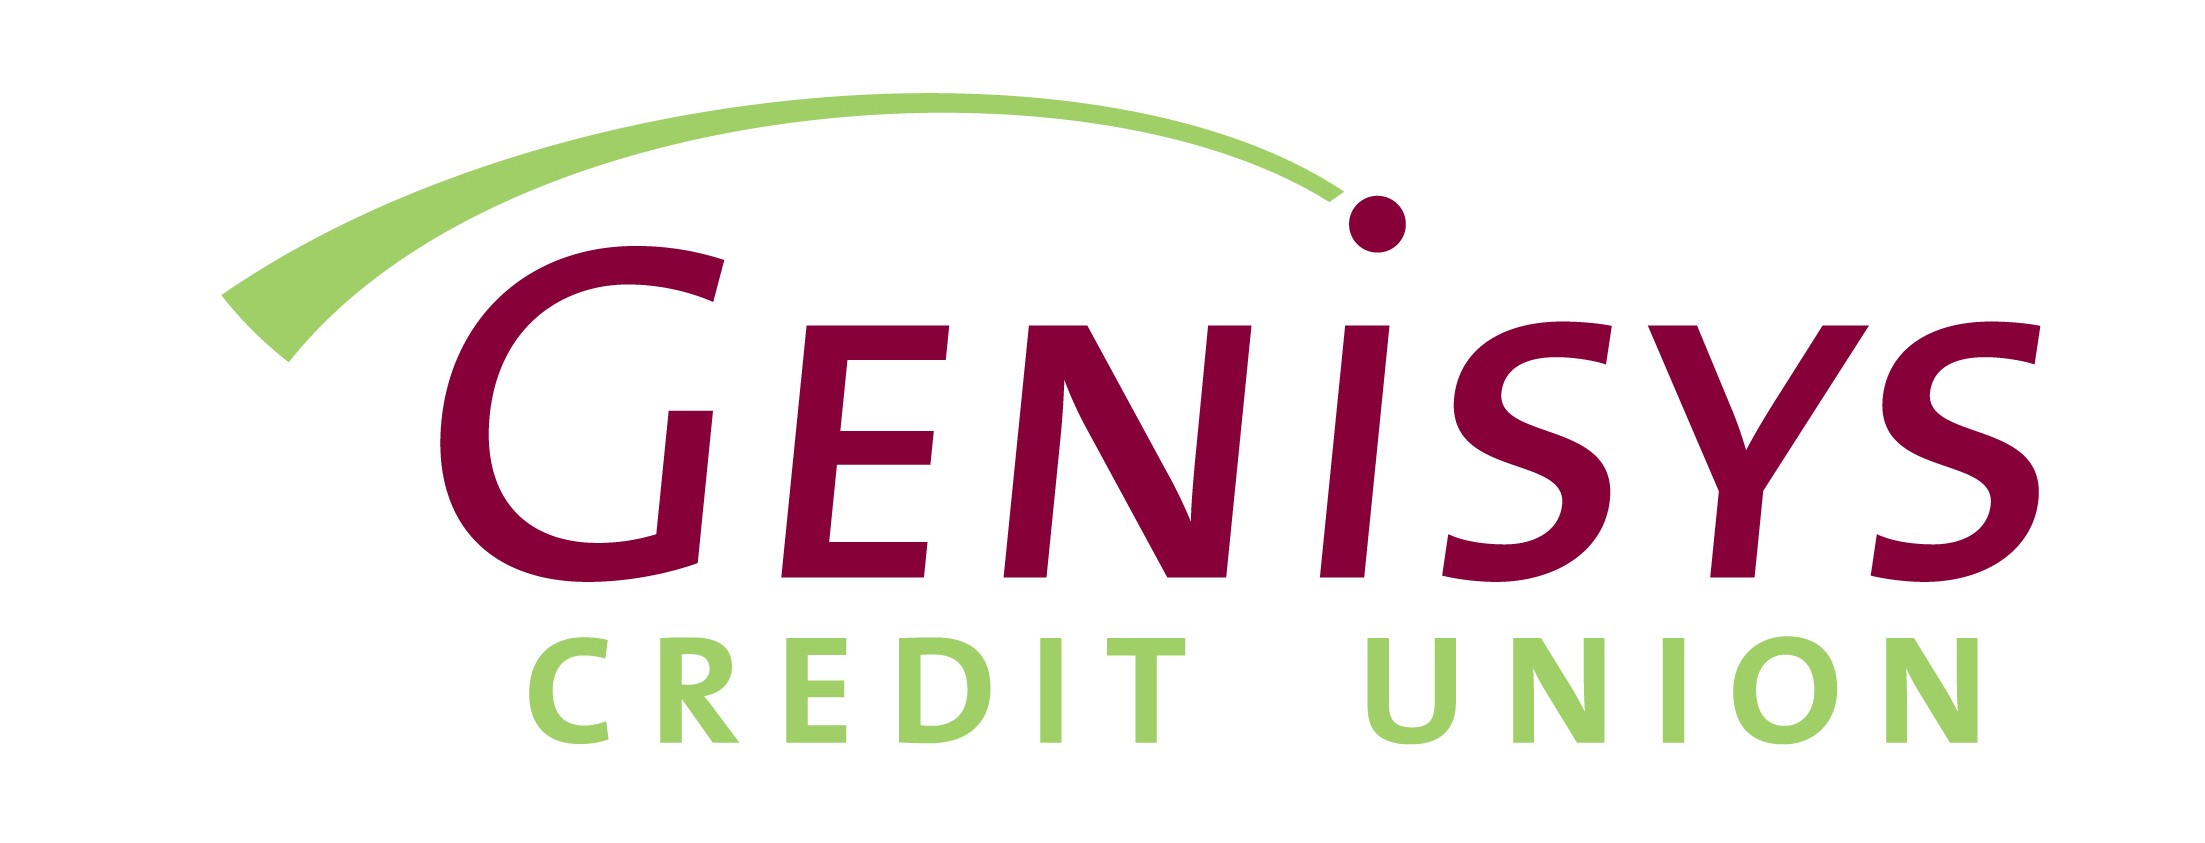 MIG_Logo_Genisys Credit Union